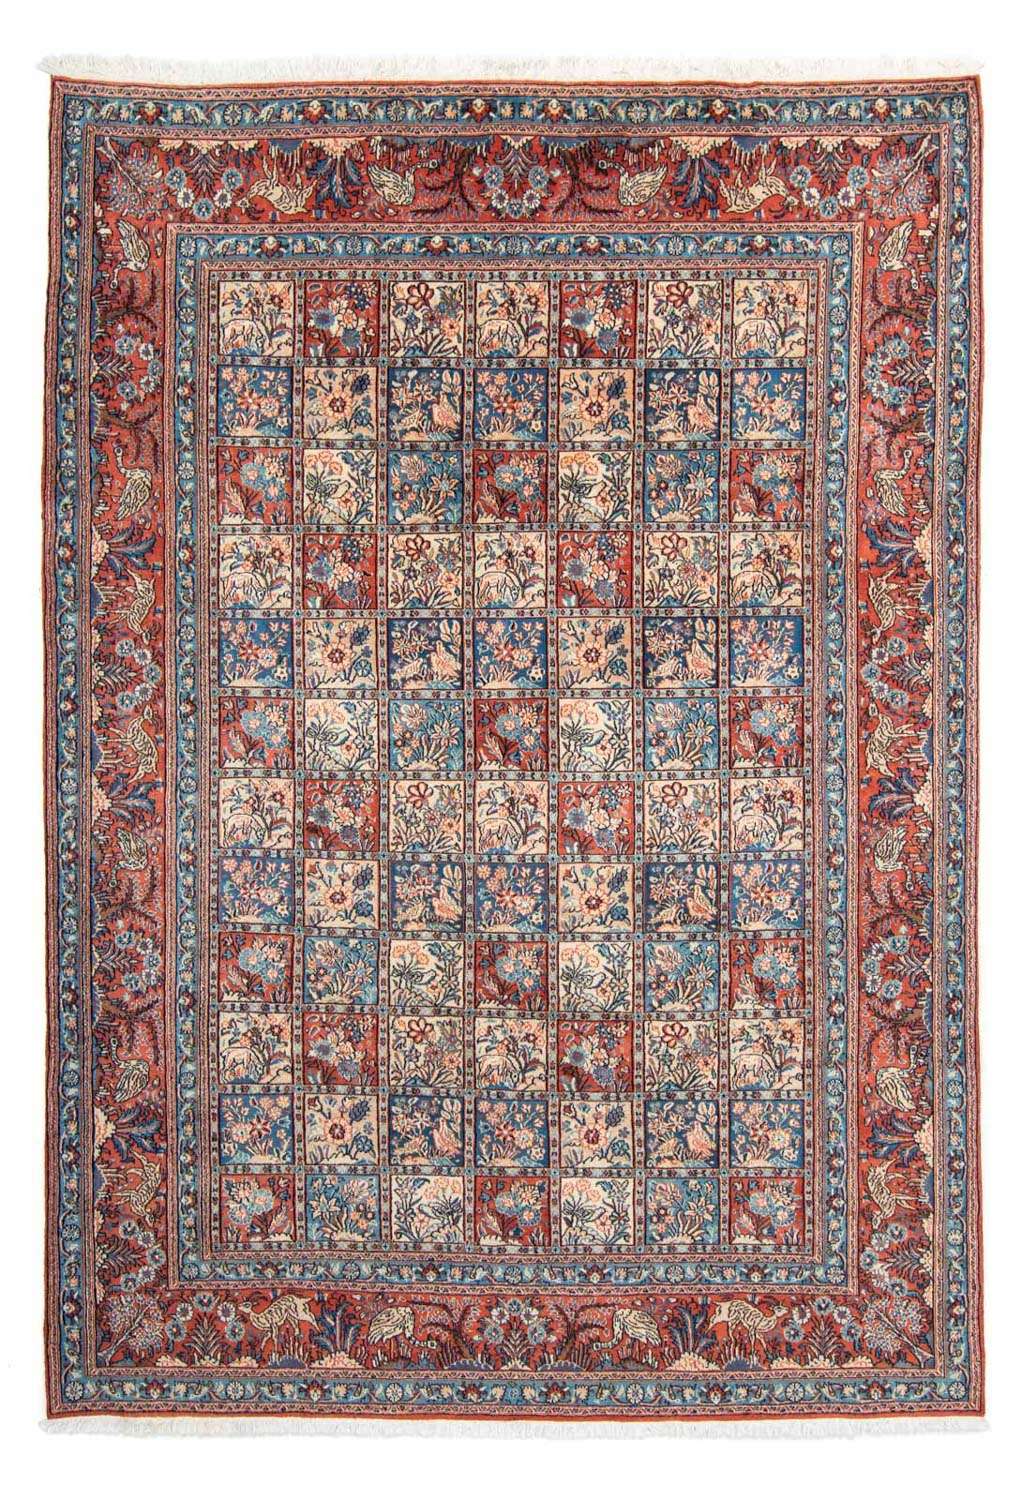 Perzisch tapijt - Klassiek - 298 x 204 cm - licht rood